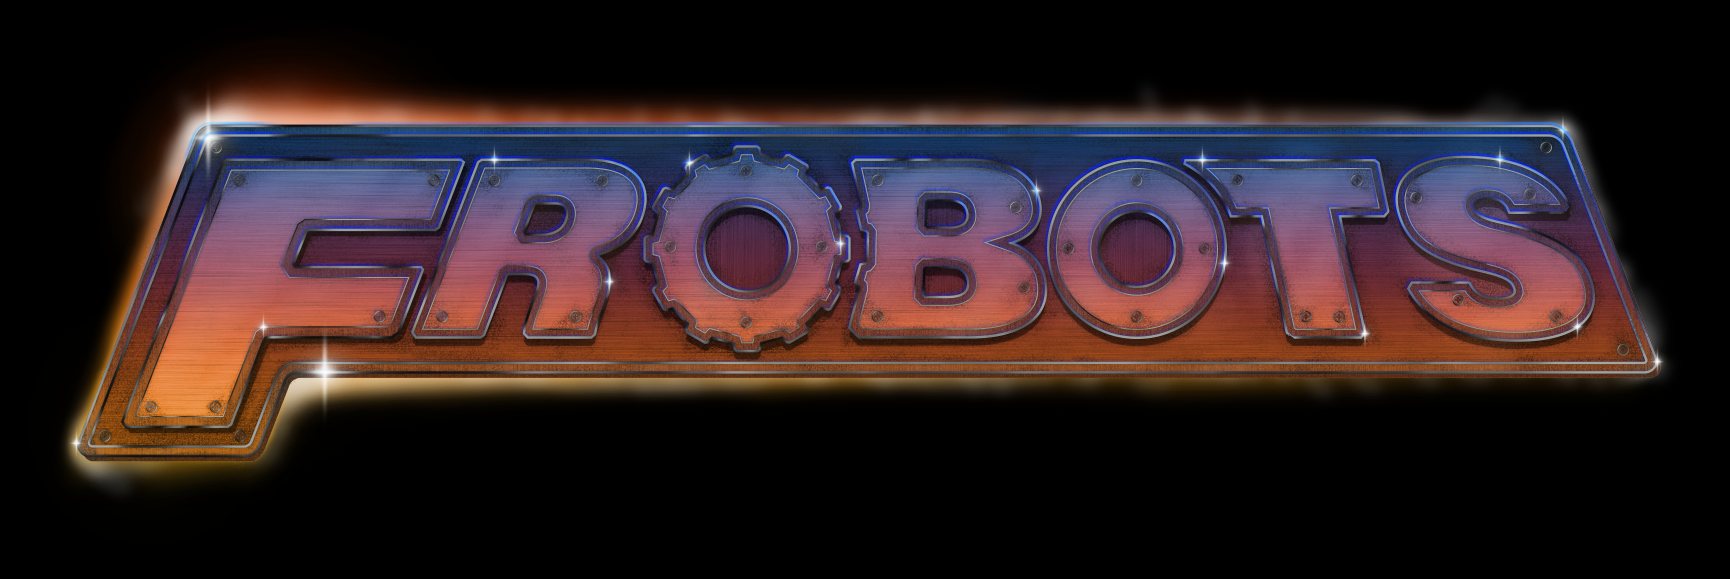 Frobots logo